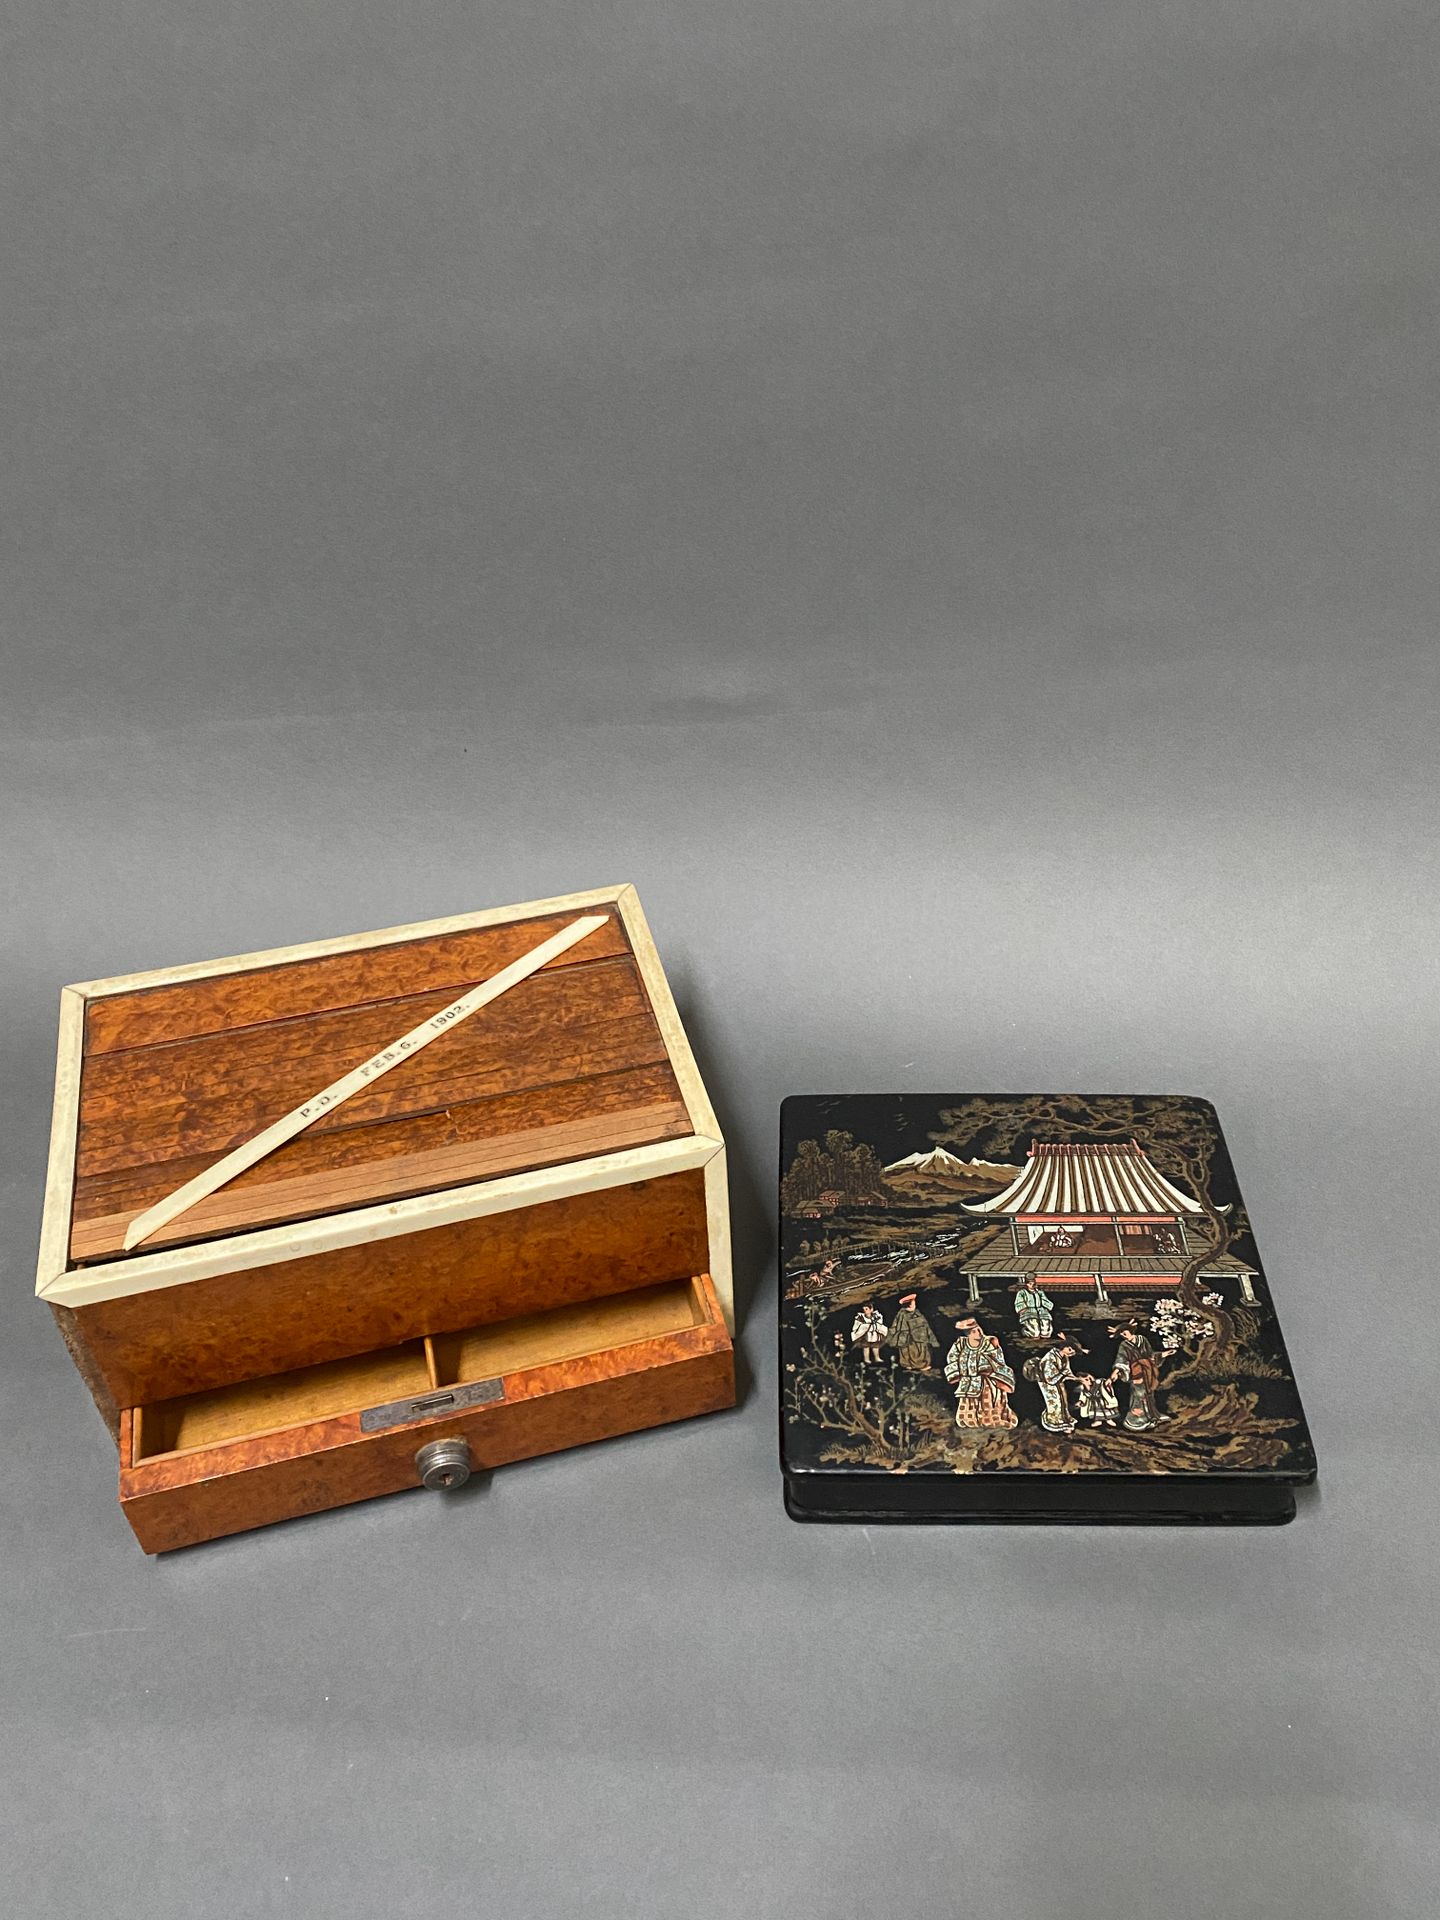 Null 长方形的毛刺饰面的箱子，有象牙棒，它的下部有一个抽屉，上部有一个盖子，可以打开。

损坏和丢失的部件

约1900年

高：11 - 宽：24 - 深&hellip;